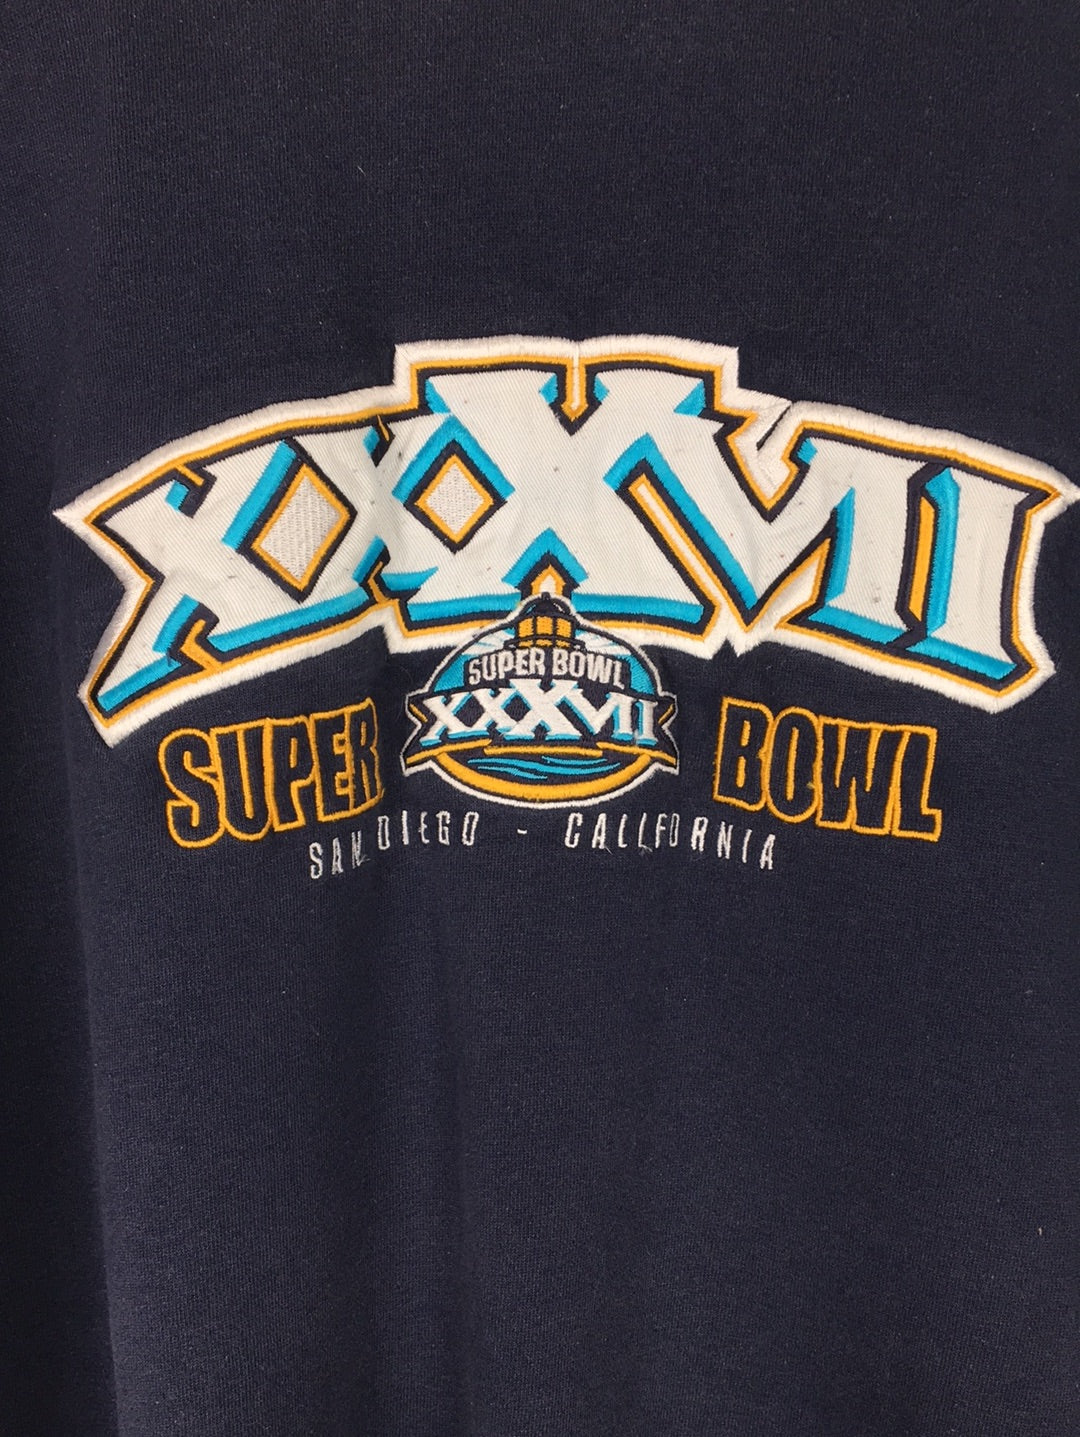 Reebok “Super Bowl 2003” Sweater (XL)